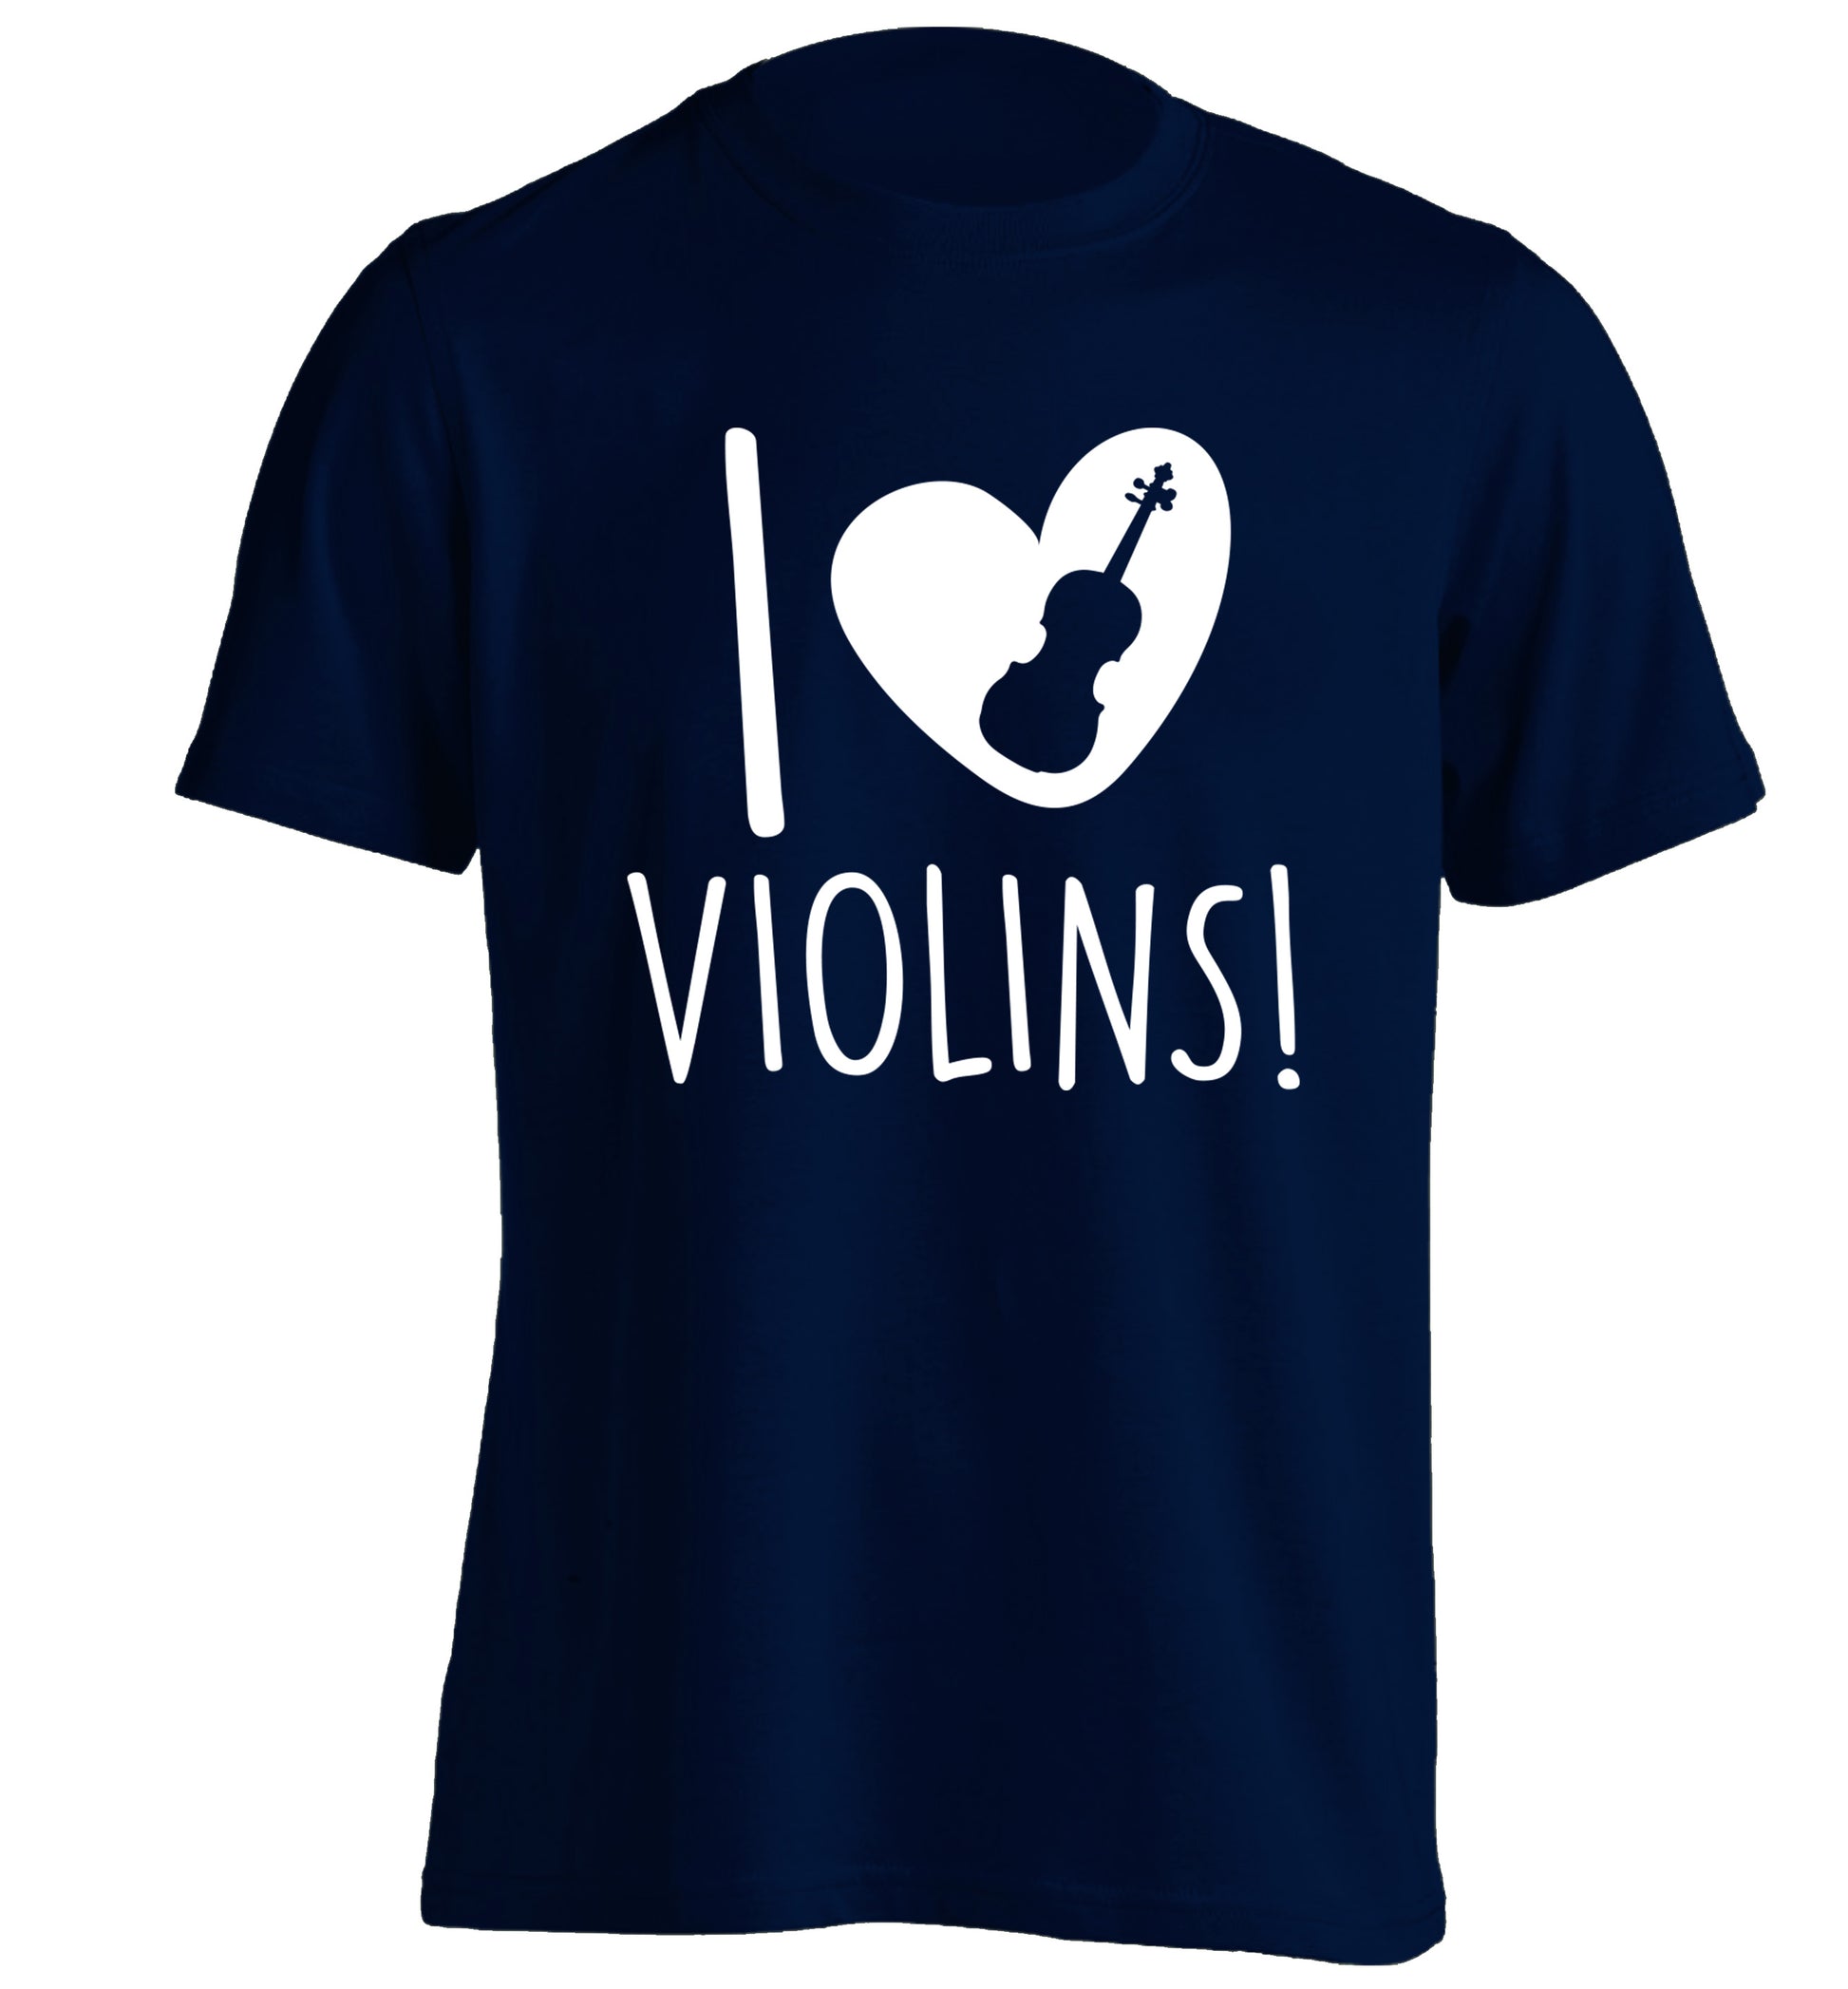 I Love Violins adults unisex navy Tshirt 2XL